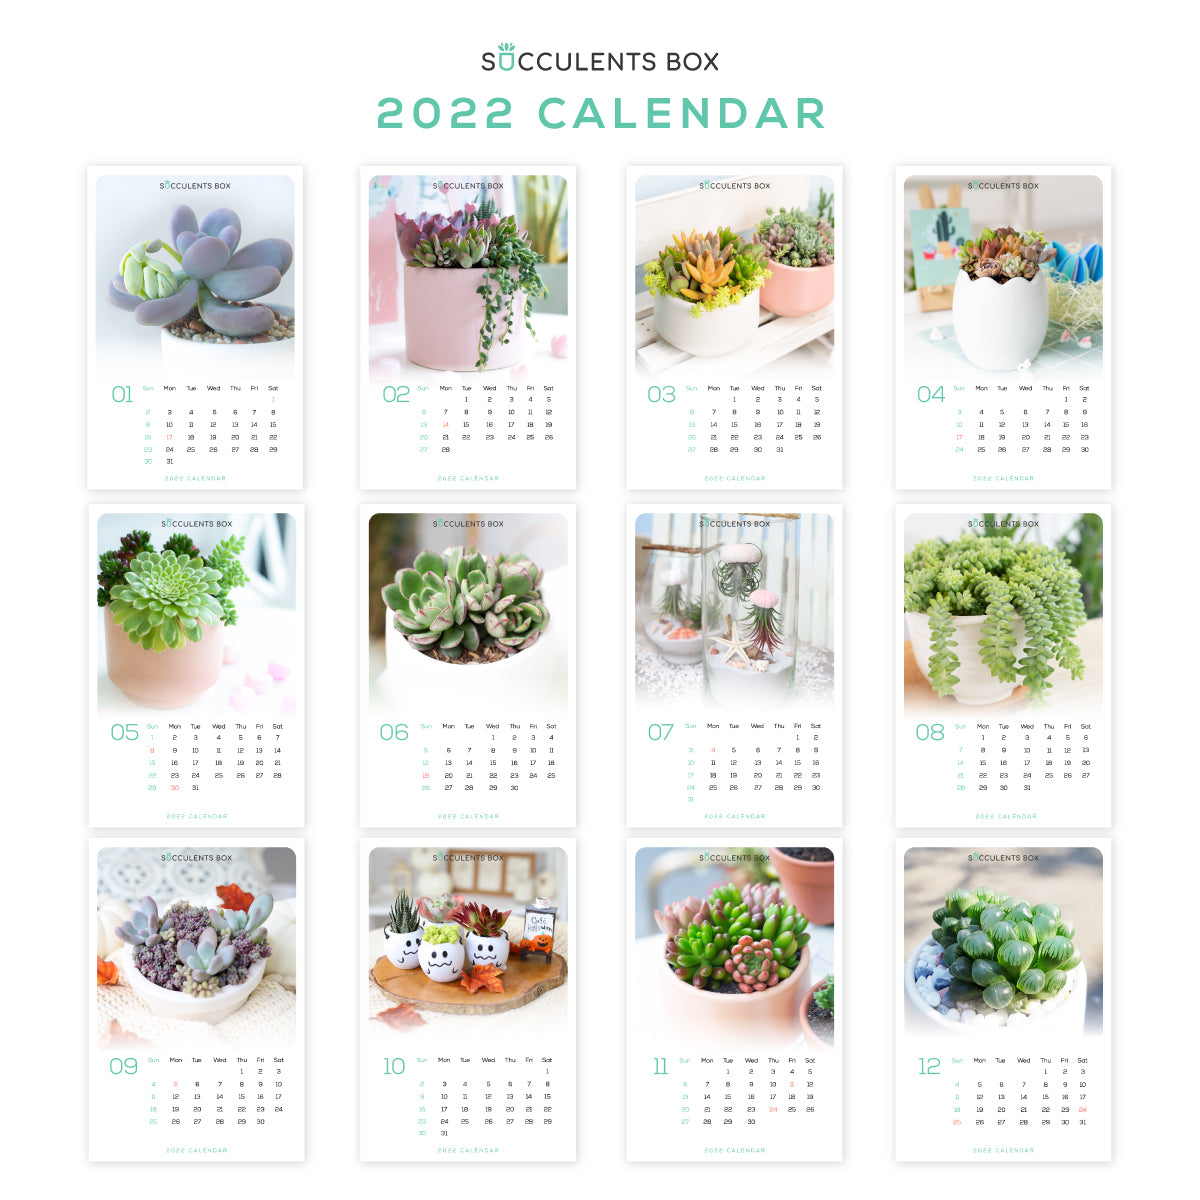 Succulent Calendar 2022, Printable Monthly Cactus and Succulents Calendar, Cute office calendar, Modern office calendar decor, 2022 Succulents Wall Calendar, Nature Themed Home, Office -Housewarming Gift